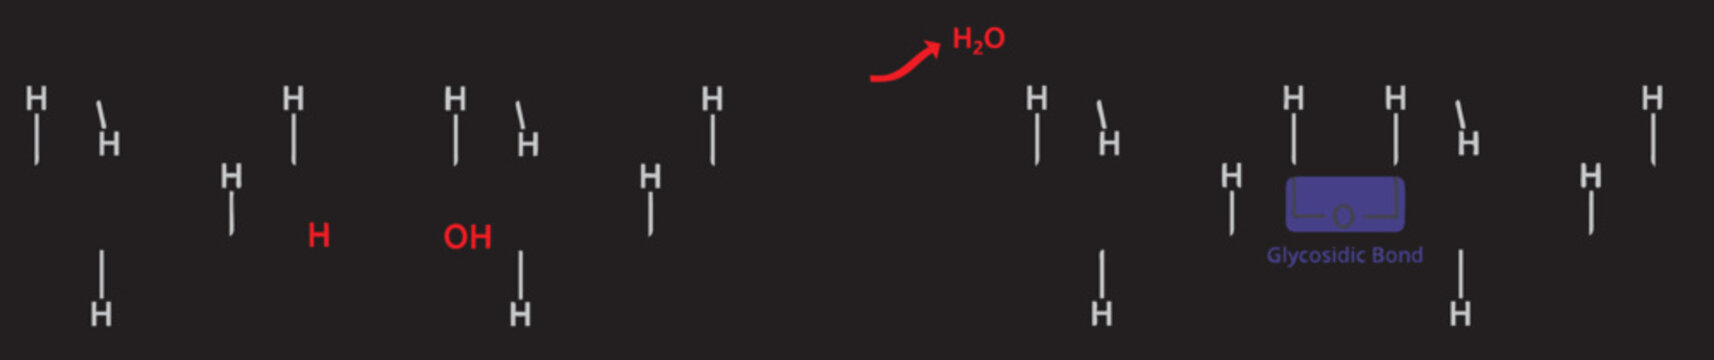 Maltose produced by two glucose molecules